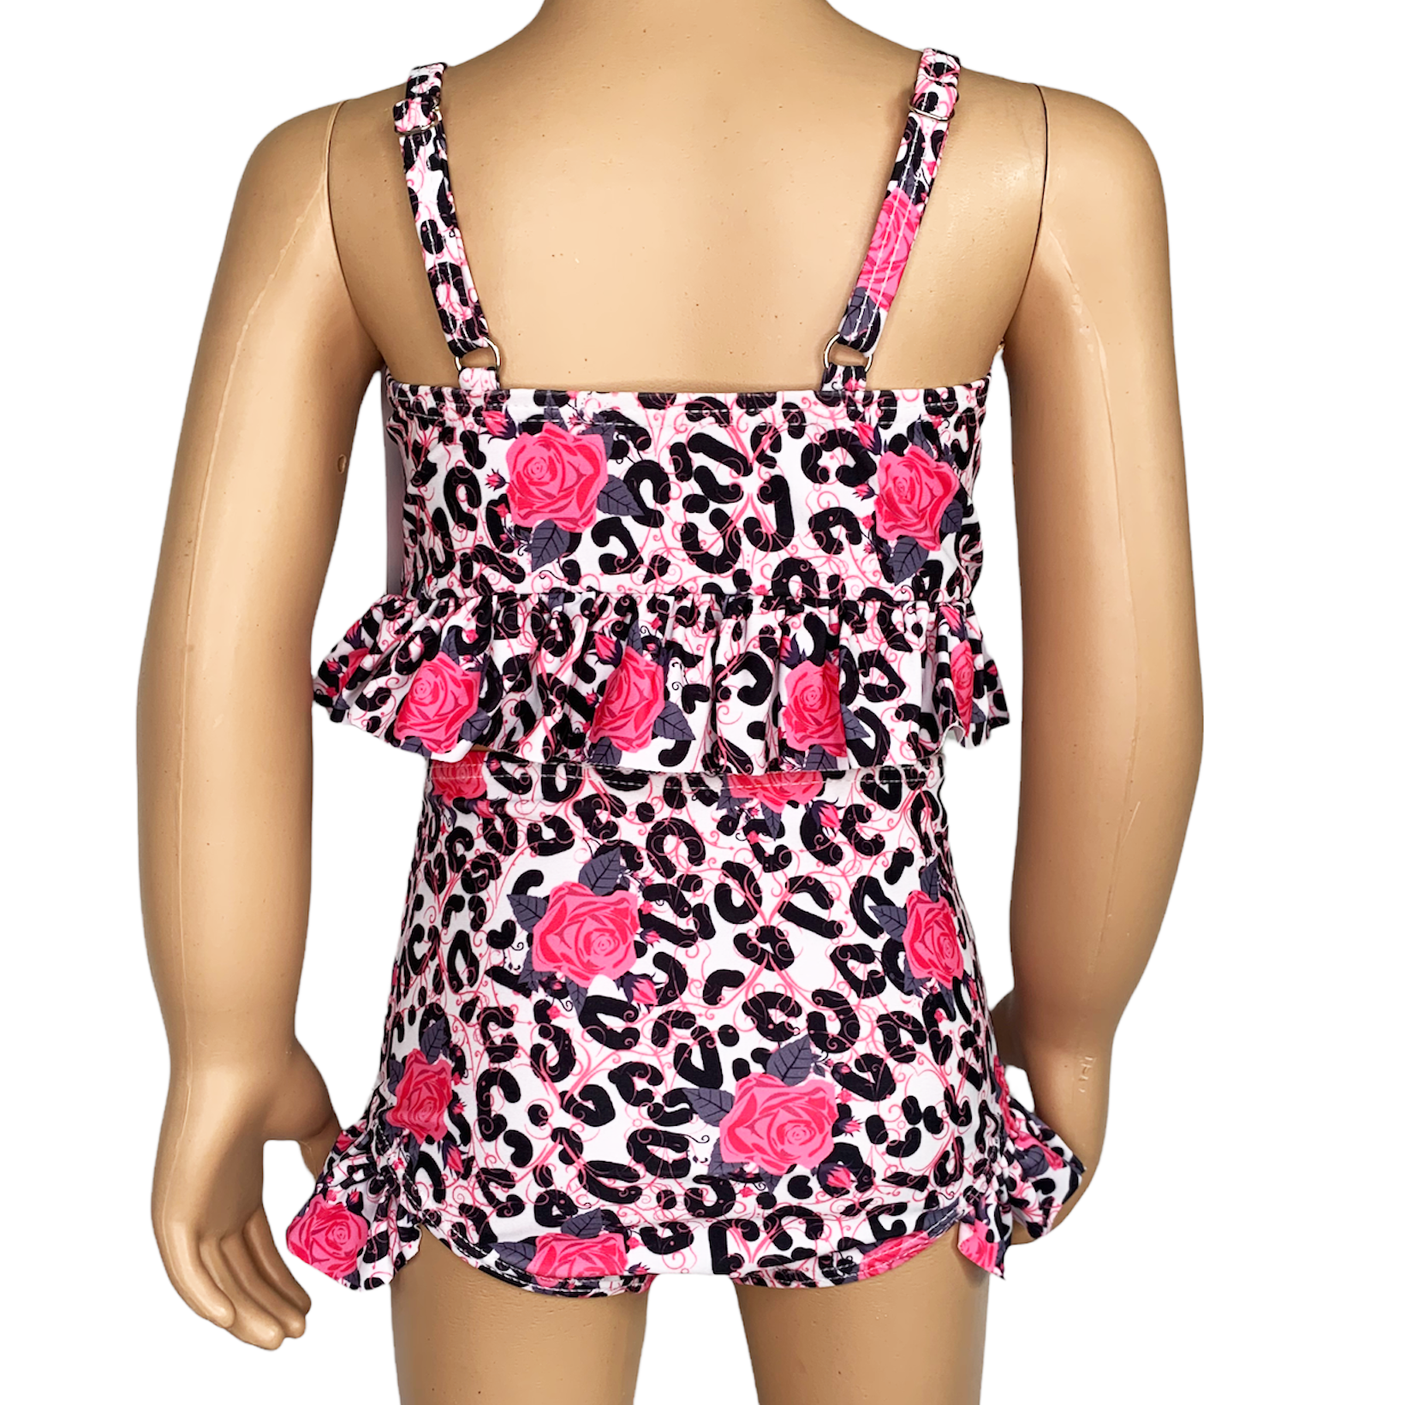 AL Limited Girls 2 piece Leopard Rose Tankini Swimsuit Bathing Suit